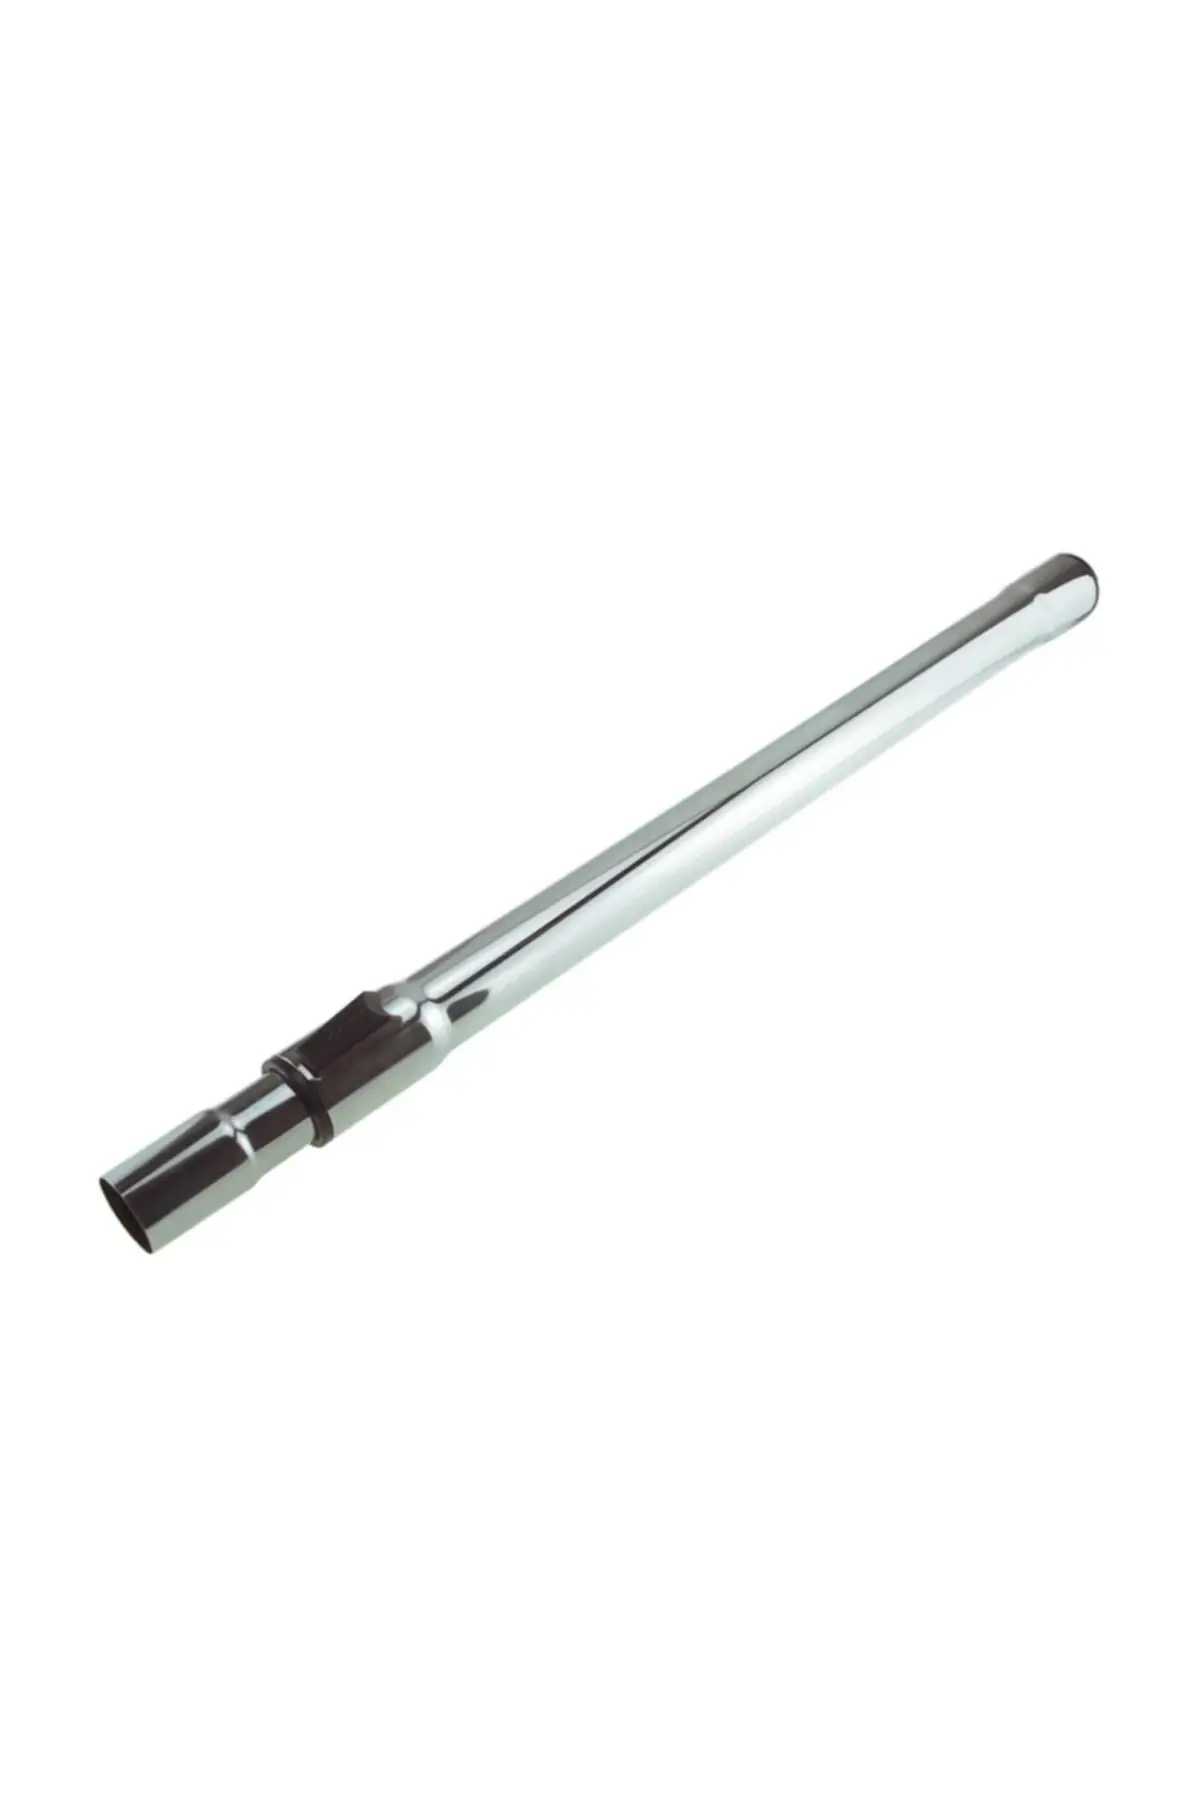 

MHK Parts Bks 5534f Compatible Telescopic Vacuum Cleaner Pipe